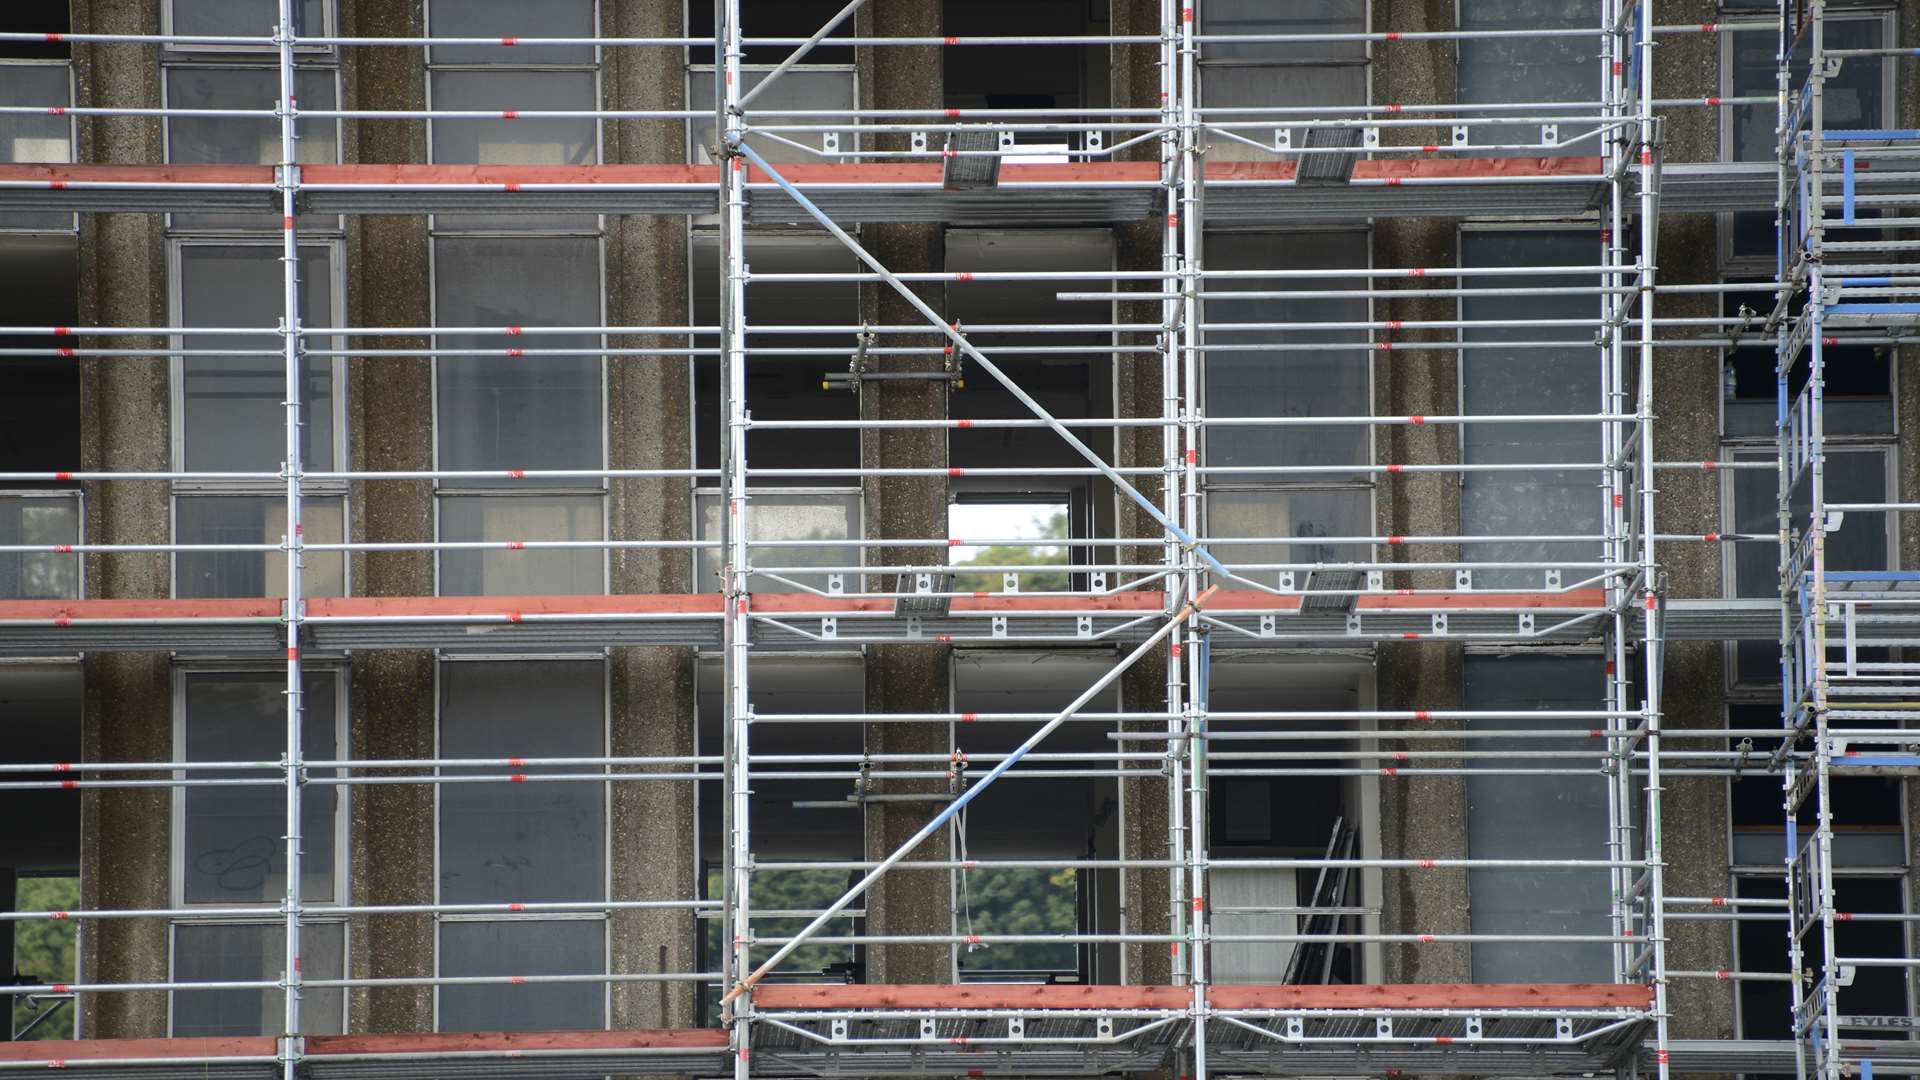 £4,000 worth of scaffolding was stolen.